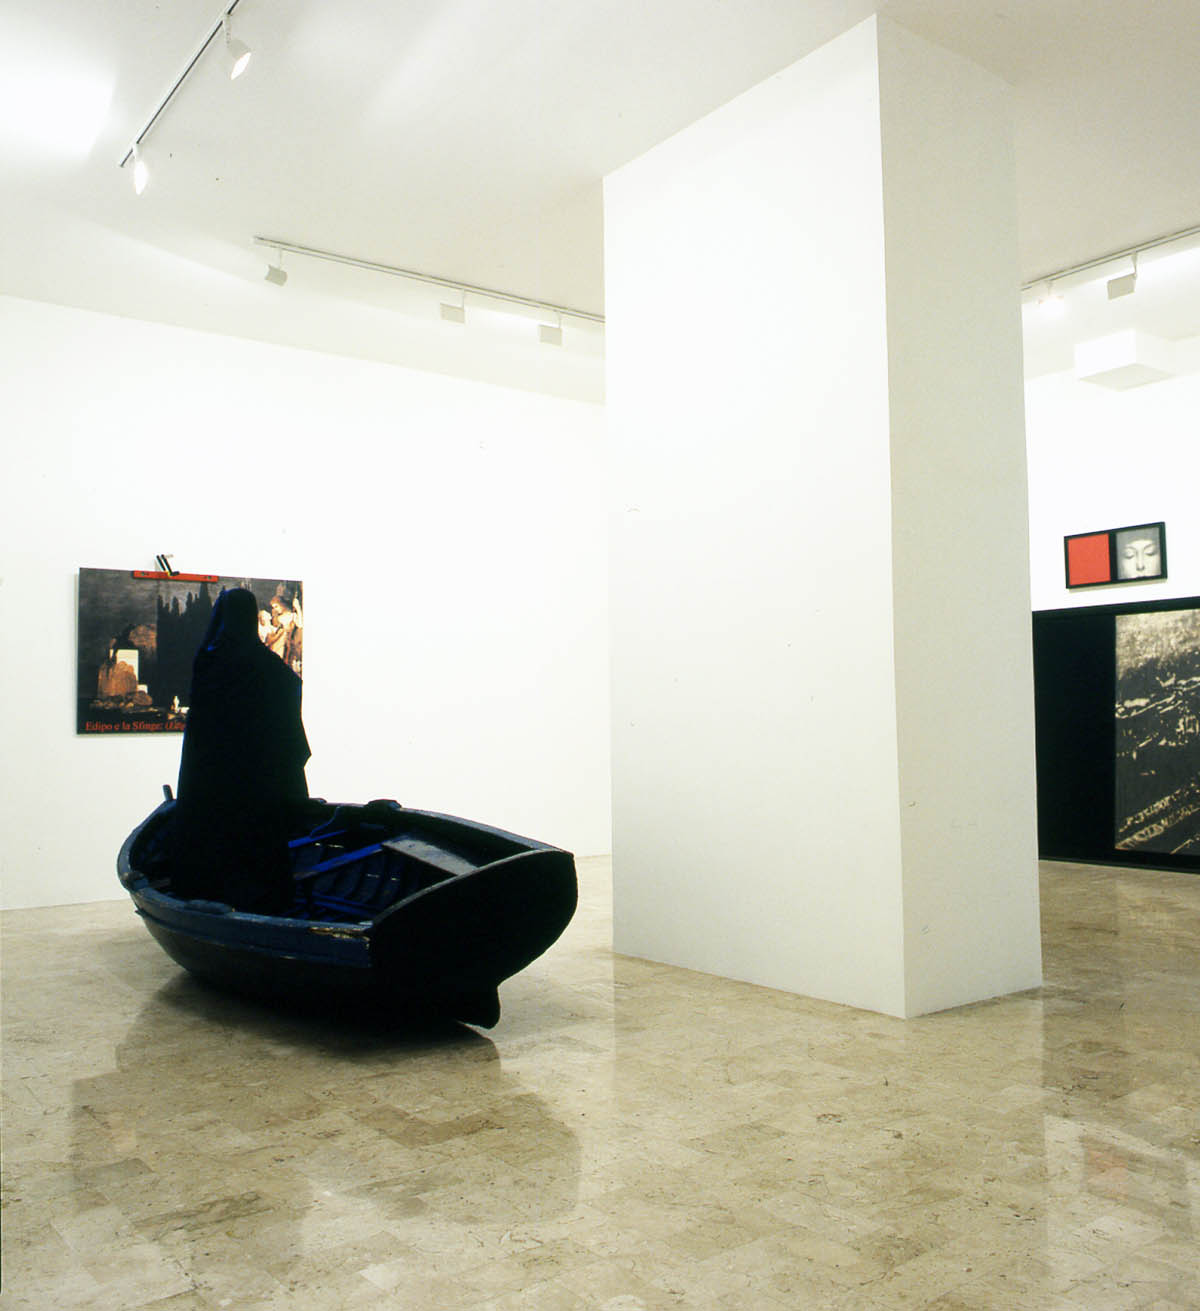  Vettor Pisani - Omar Galliani, Napoli Borderline, 2001, exhibition view